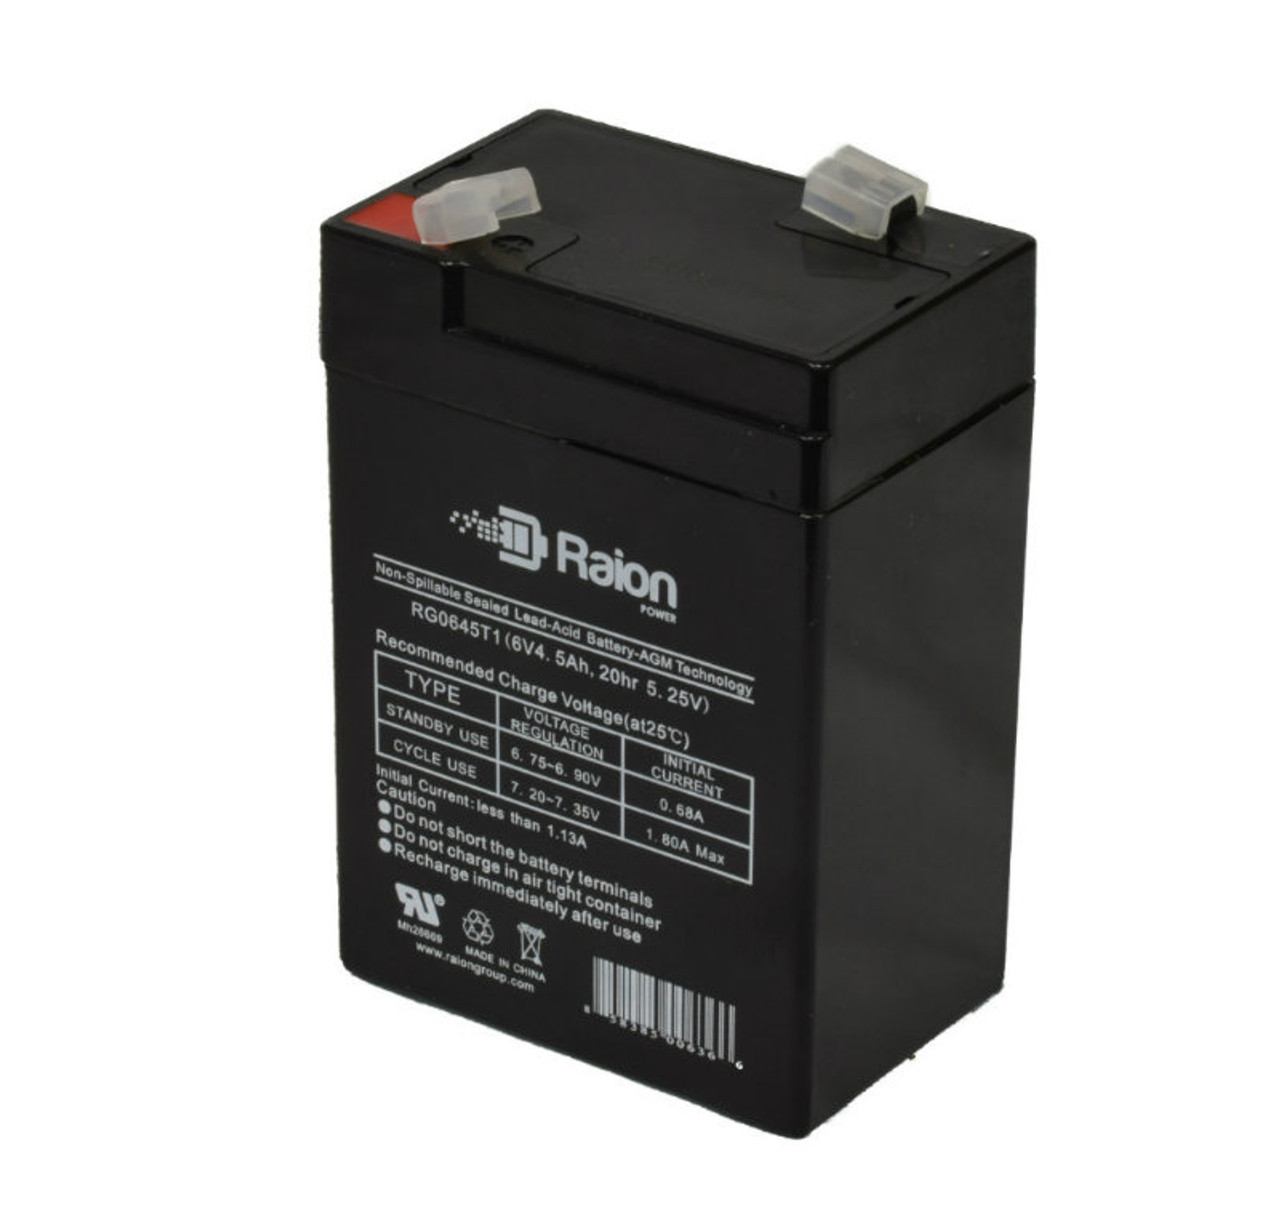 Raion Power RG0645T1 6V 4.5Ah Replacement Battery Cartridge for Sonnenschein A506/4.2S